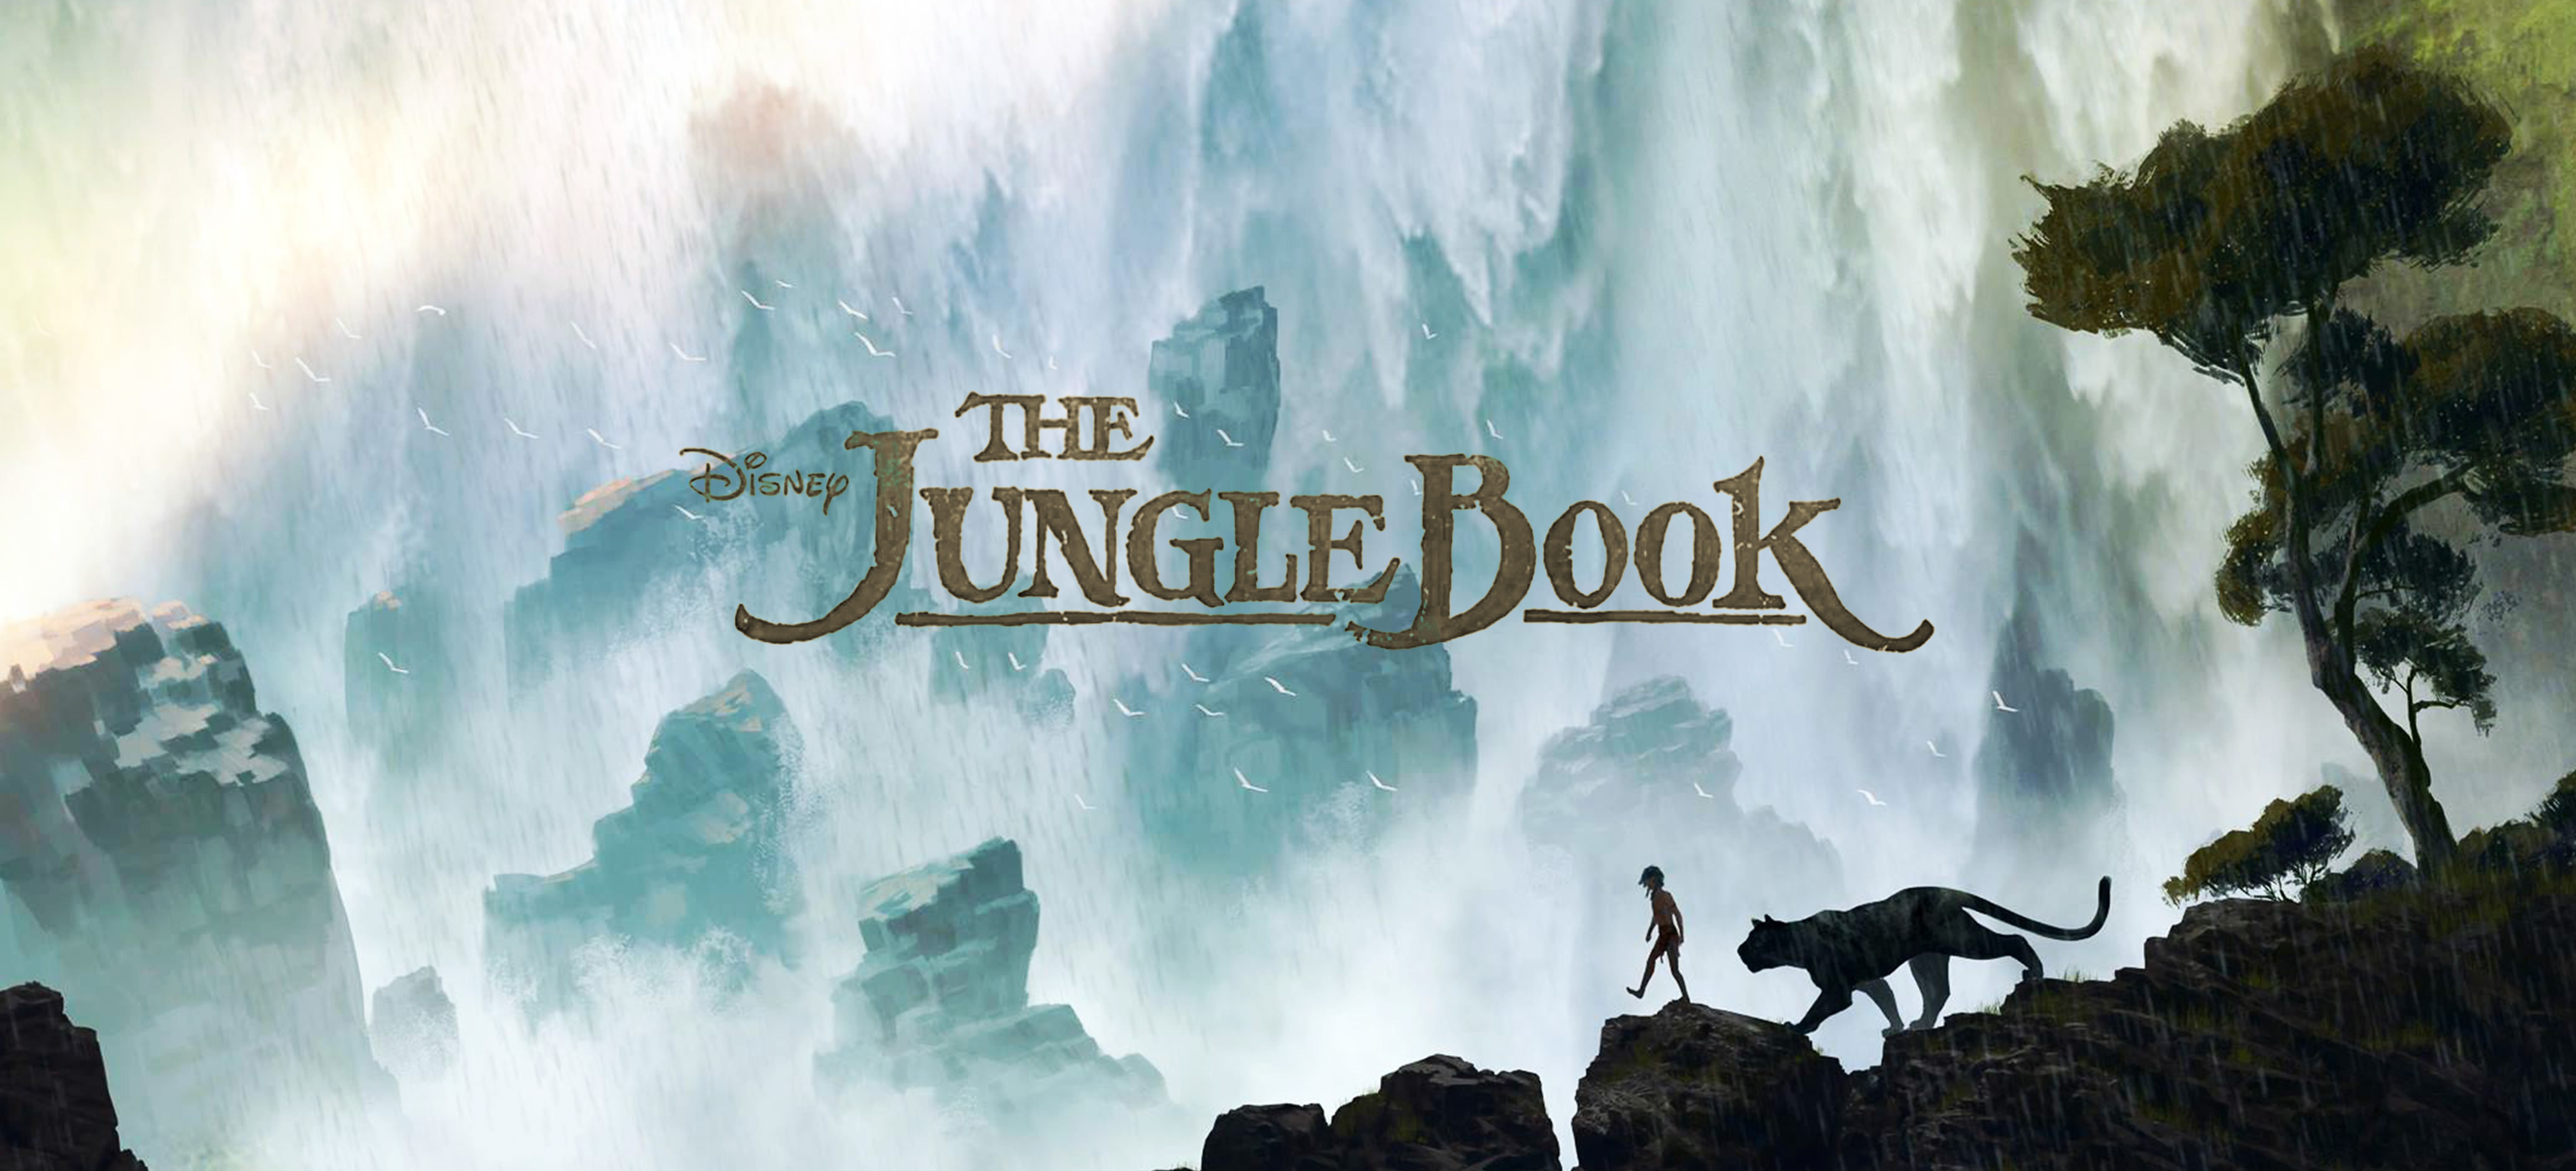 the jungle book book reviews